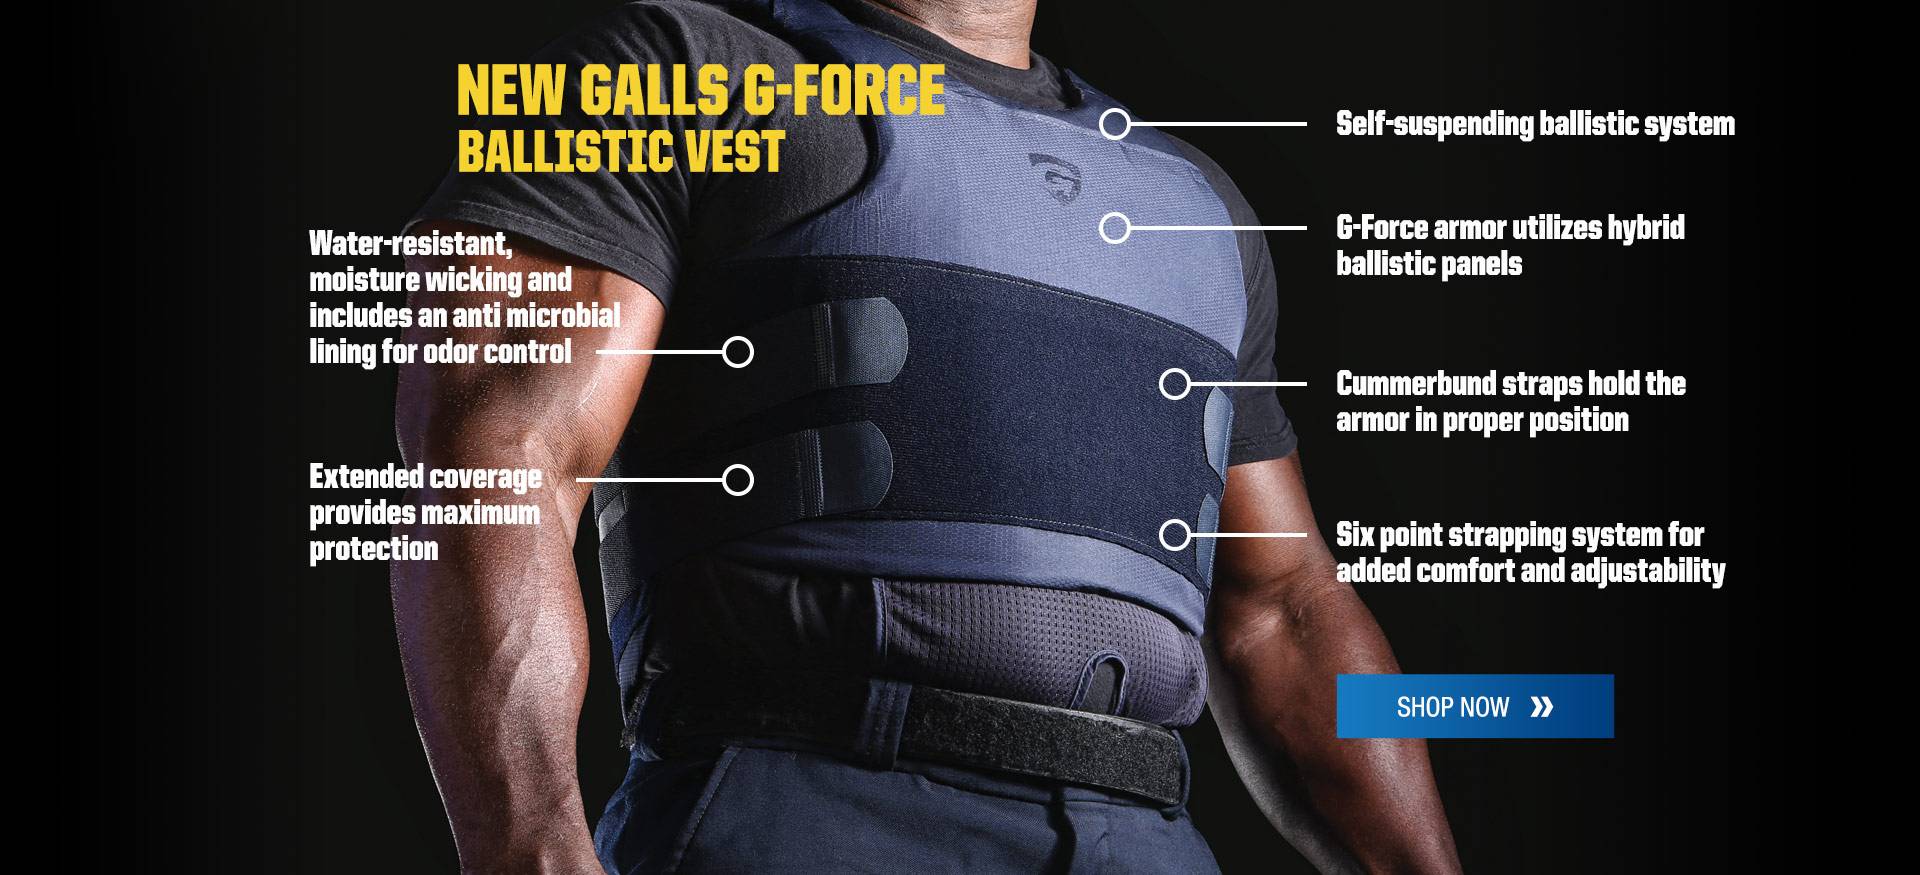 New Galls G-Force ballistic vest